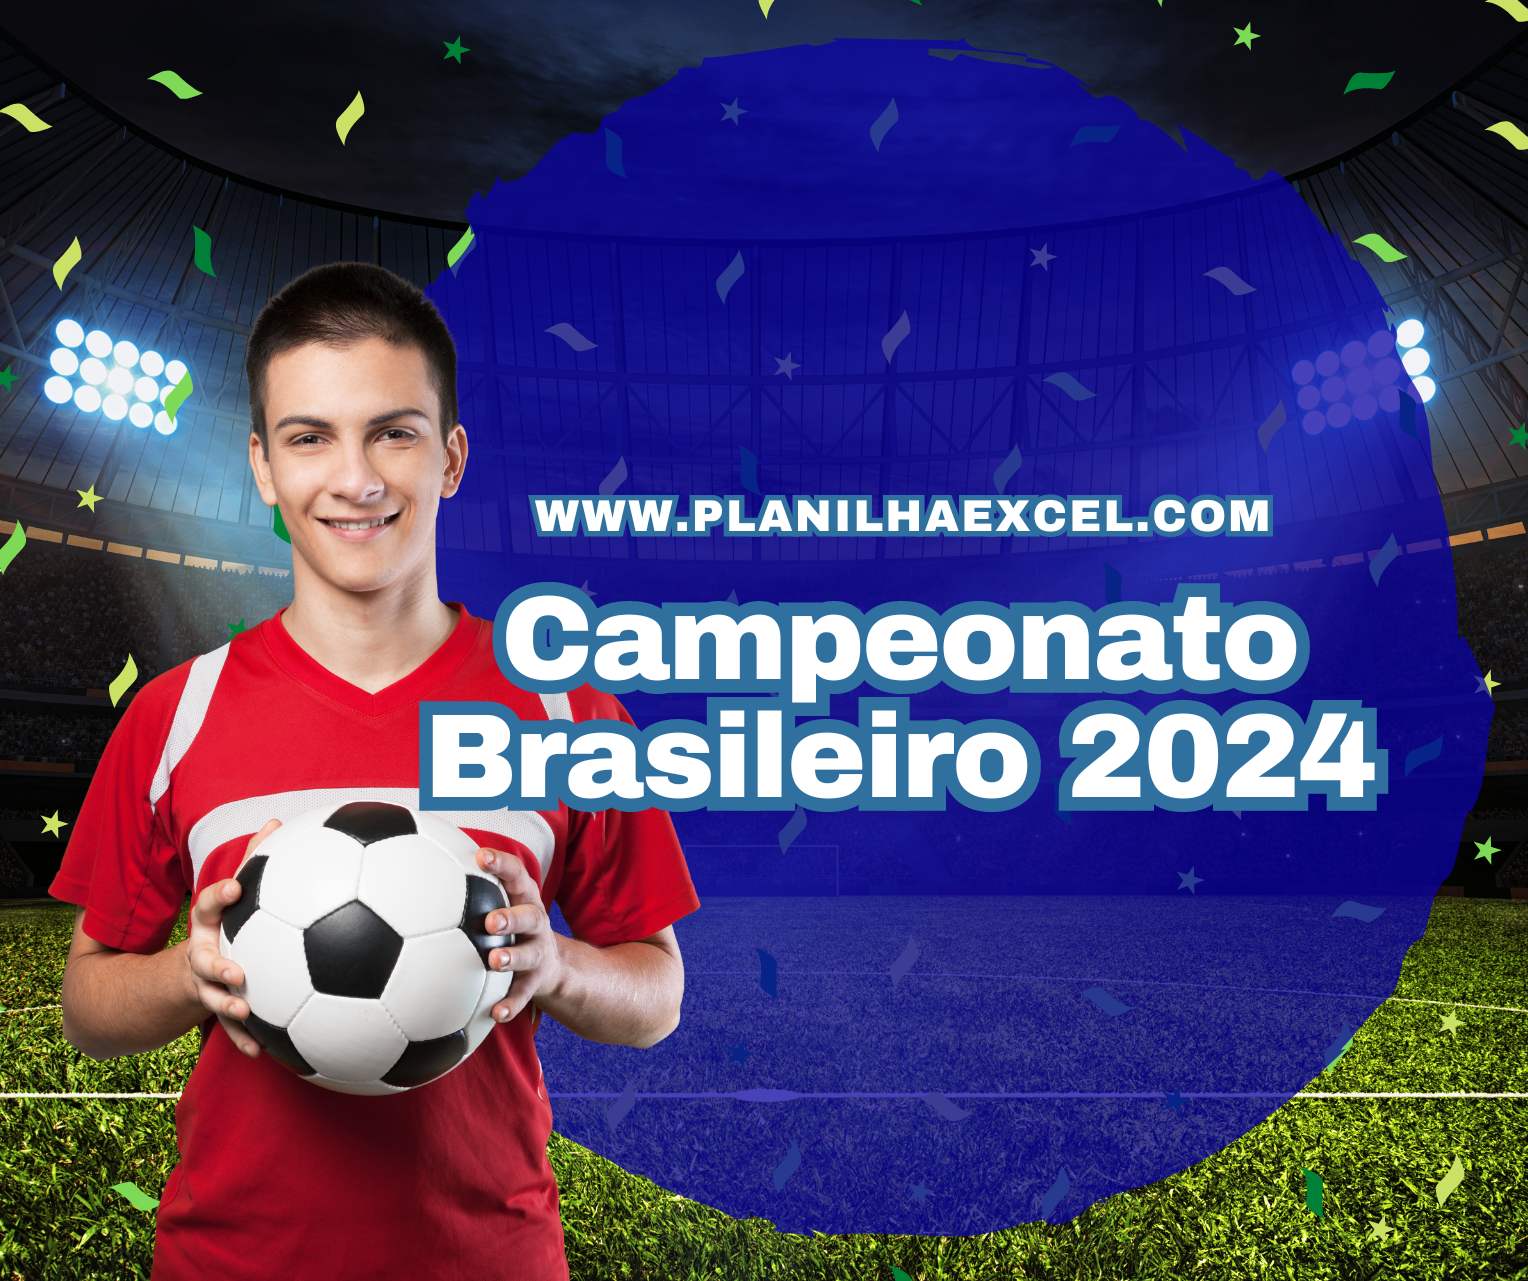 Campeonato Brasileiro 2024 Planilha Excel